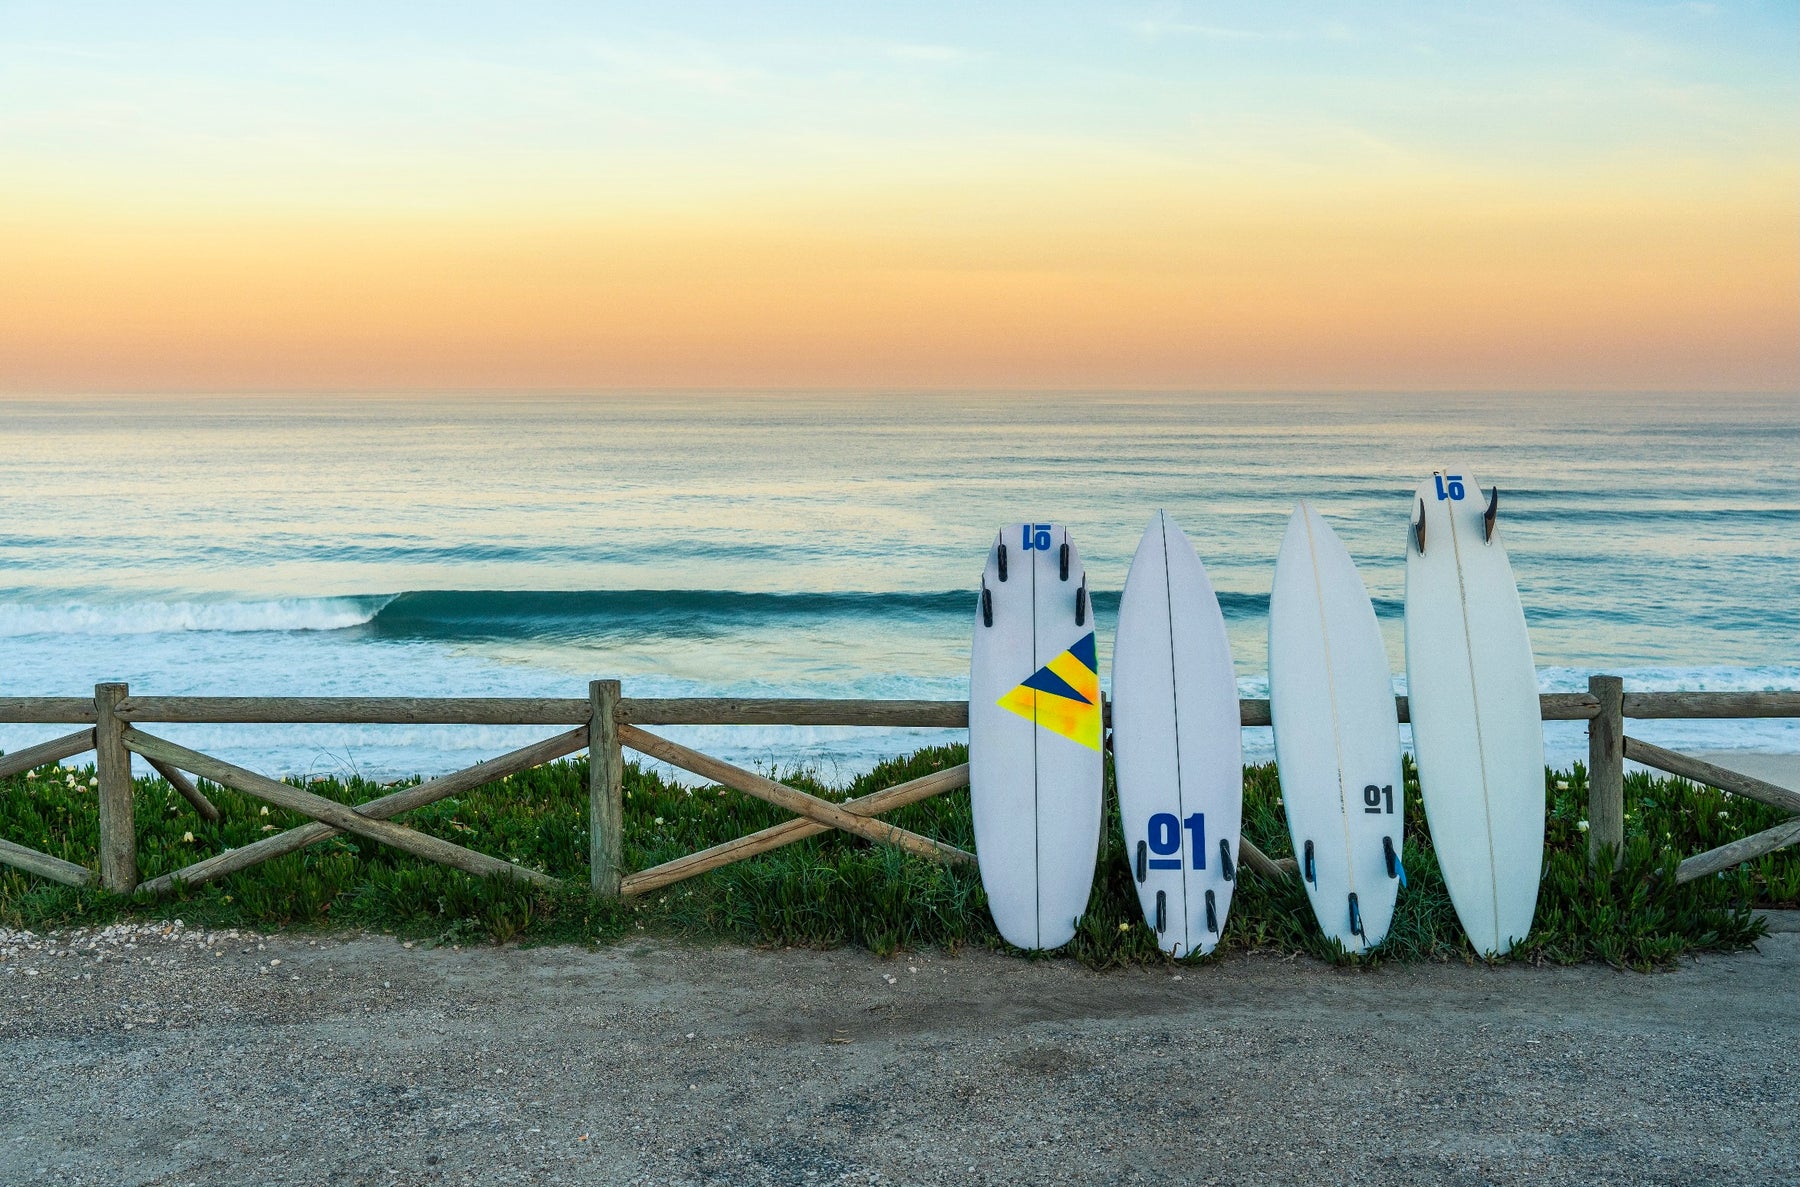 Custom surfboards overlooking the ocean at sun rise.